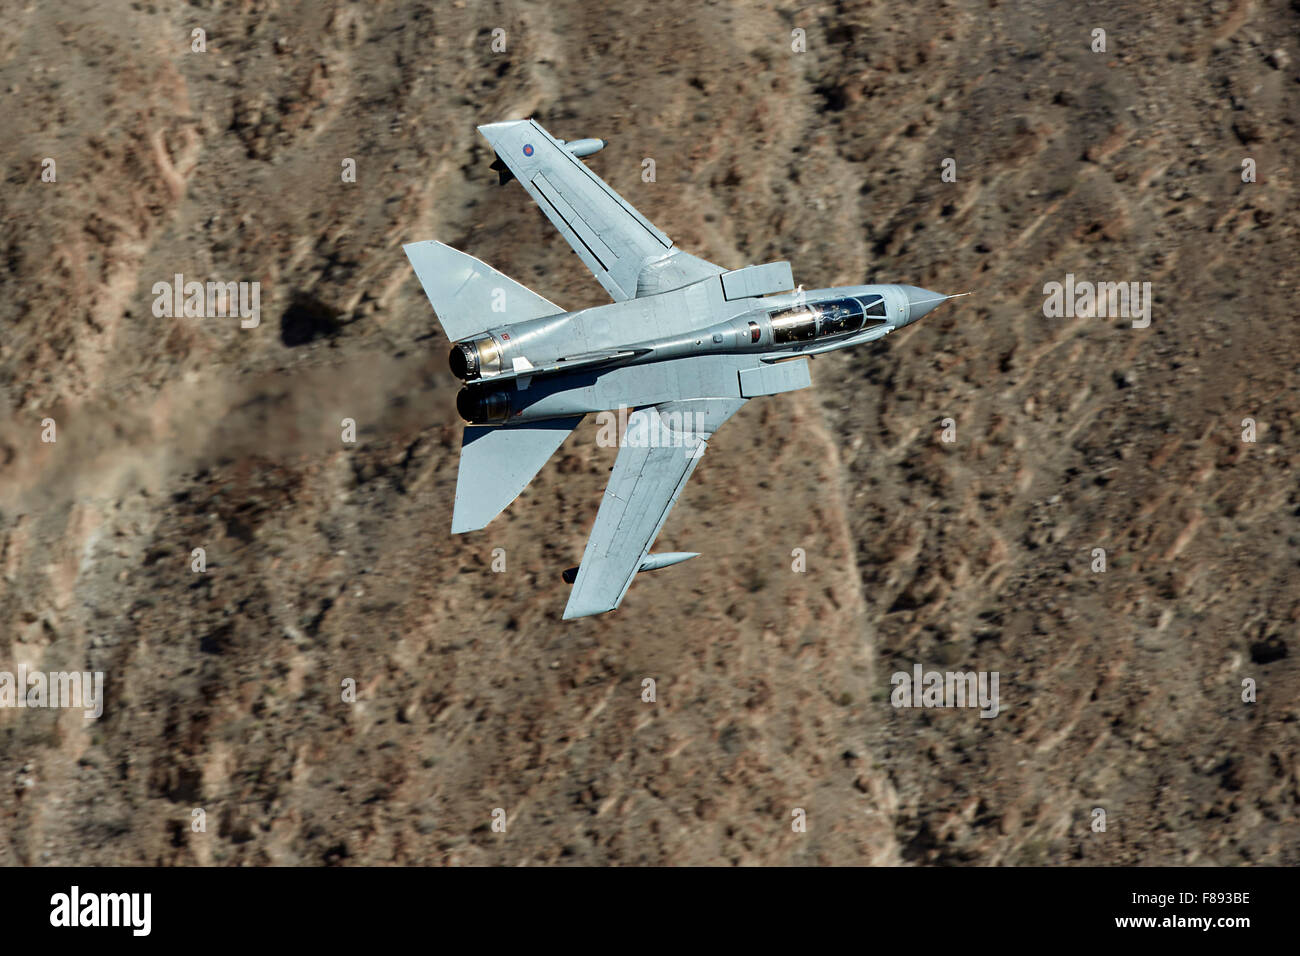 Royal Air Force Tornado GR4 Jet Fighter Flying At Banking Through Rainbow Canyon, California. Stock Photo